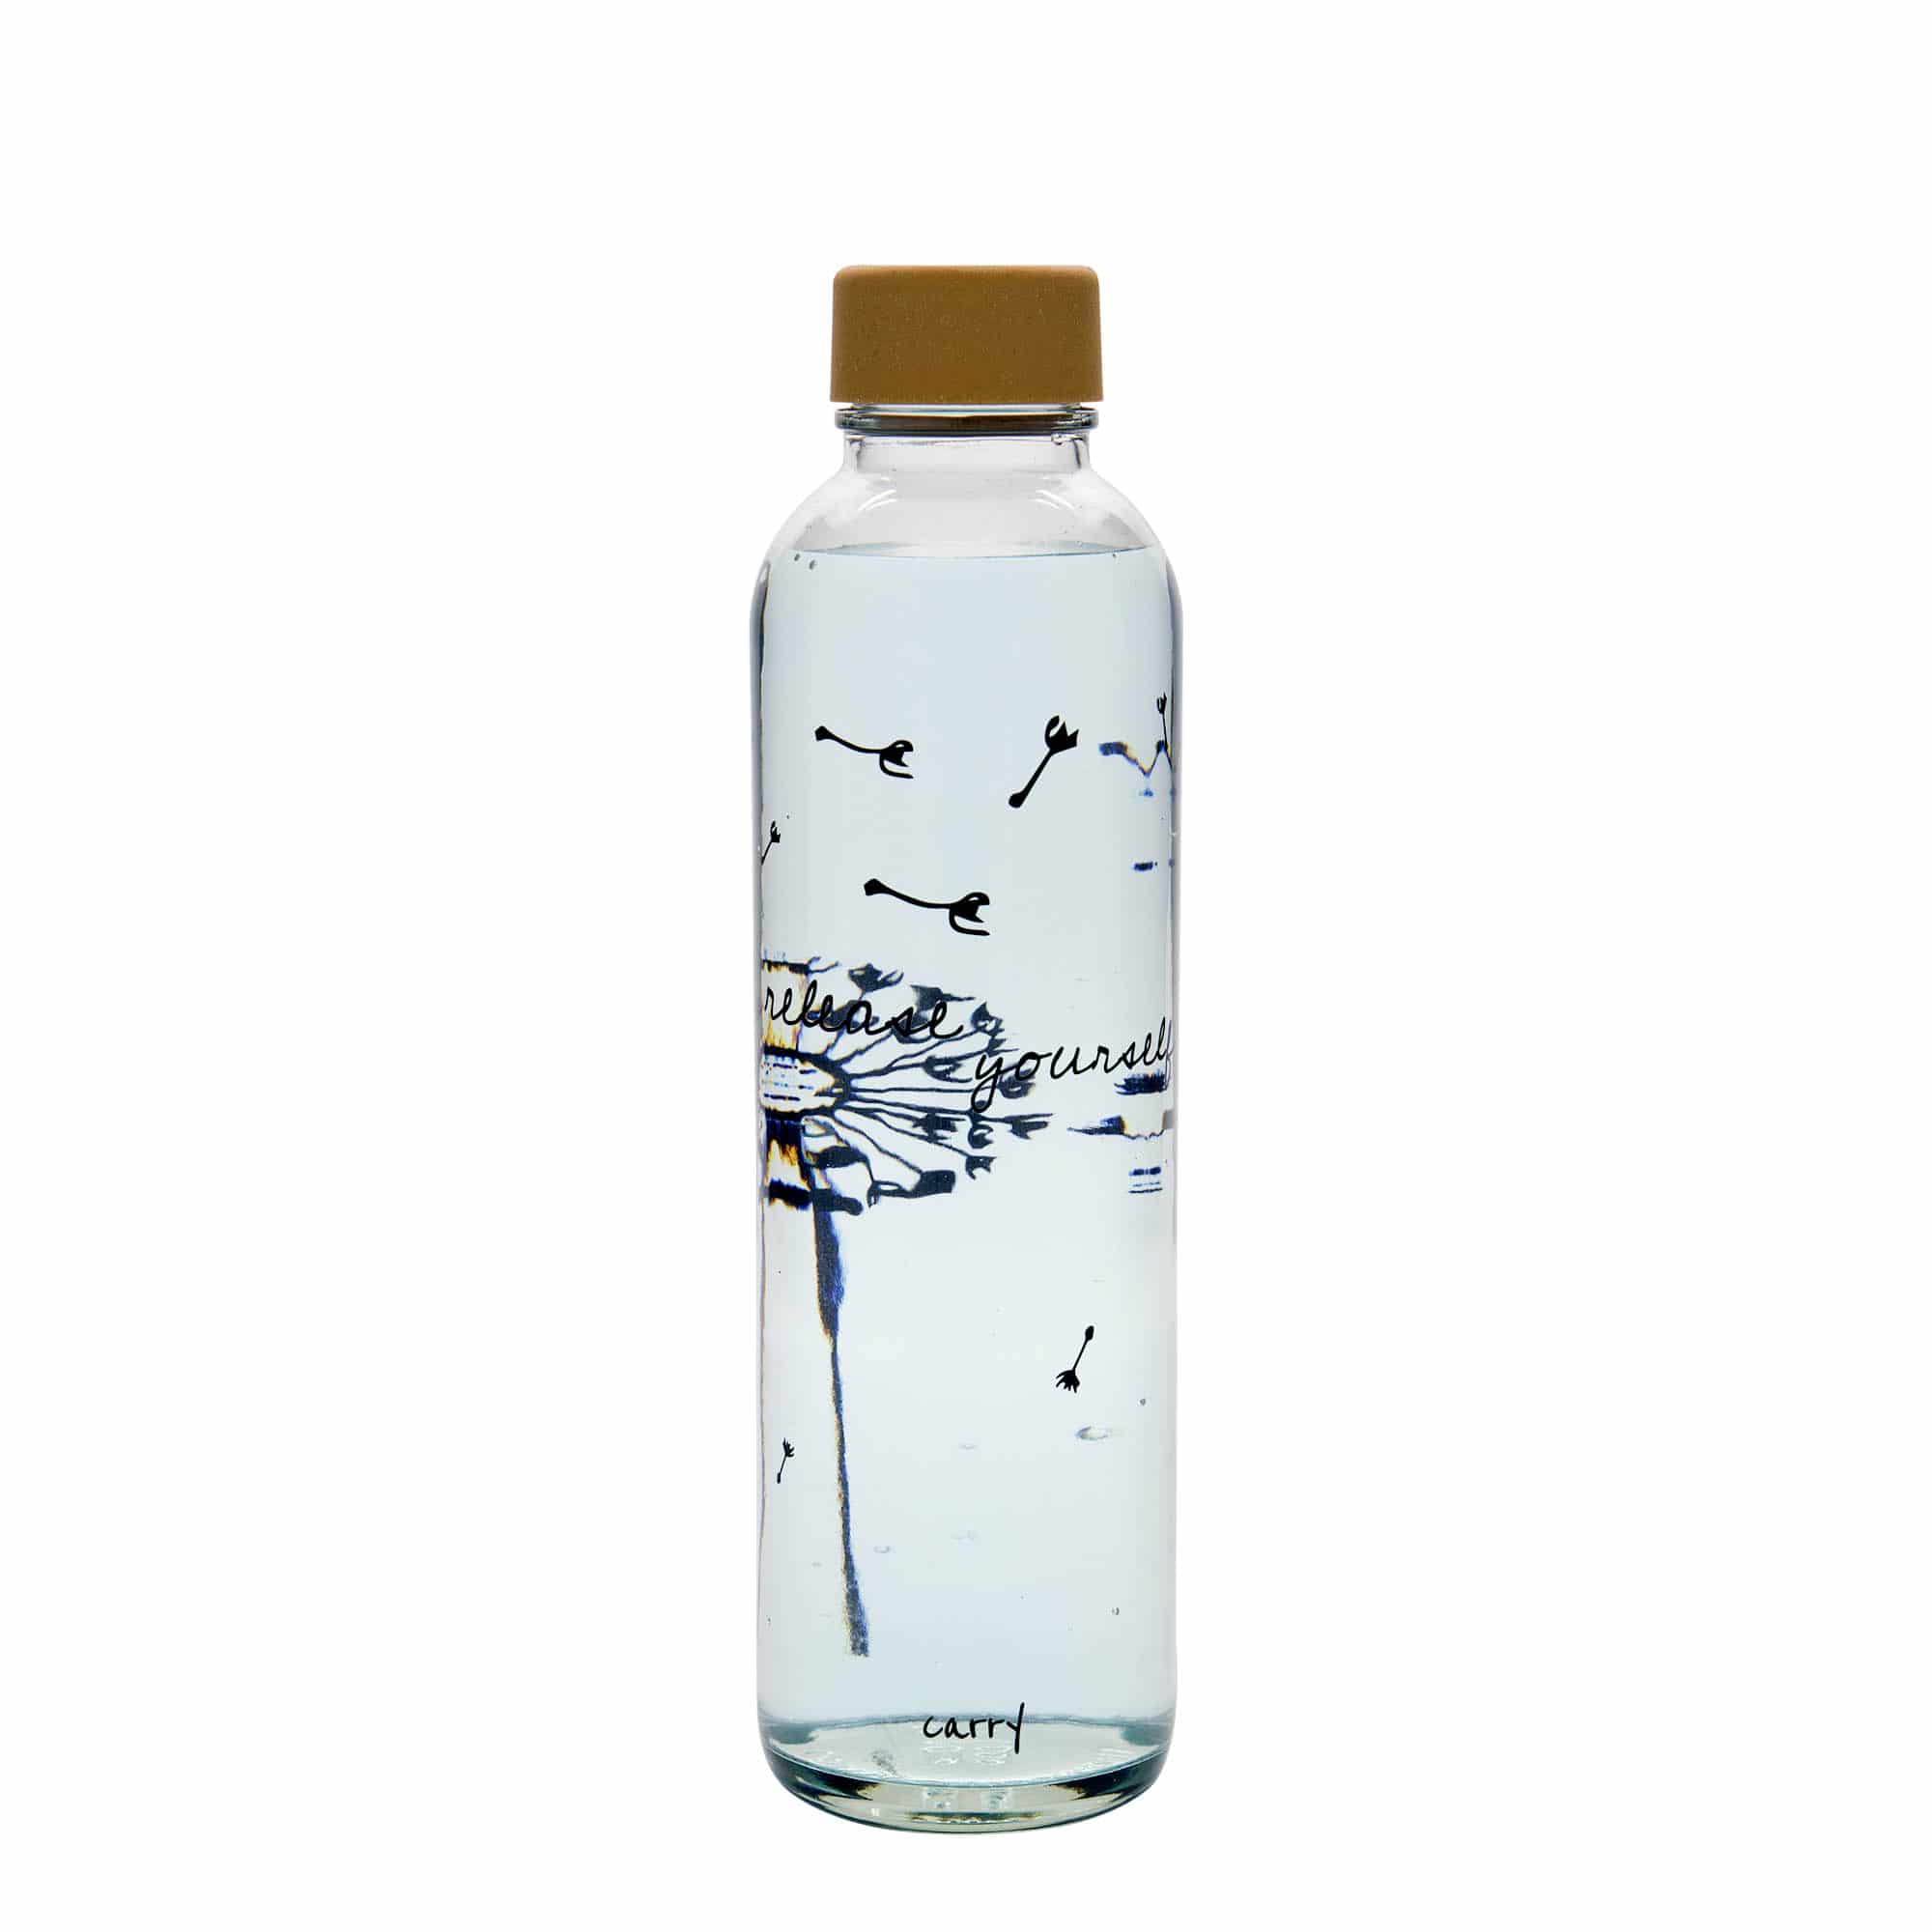 700 ml water bottle ‘CARRY Bottle’, print: Release Yourself, closure: screw cap